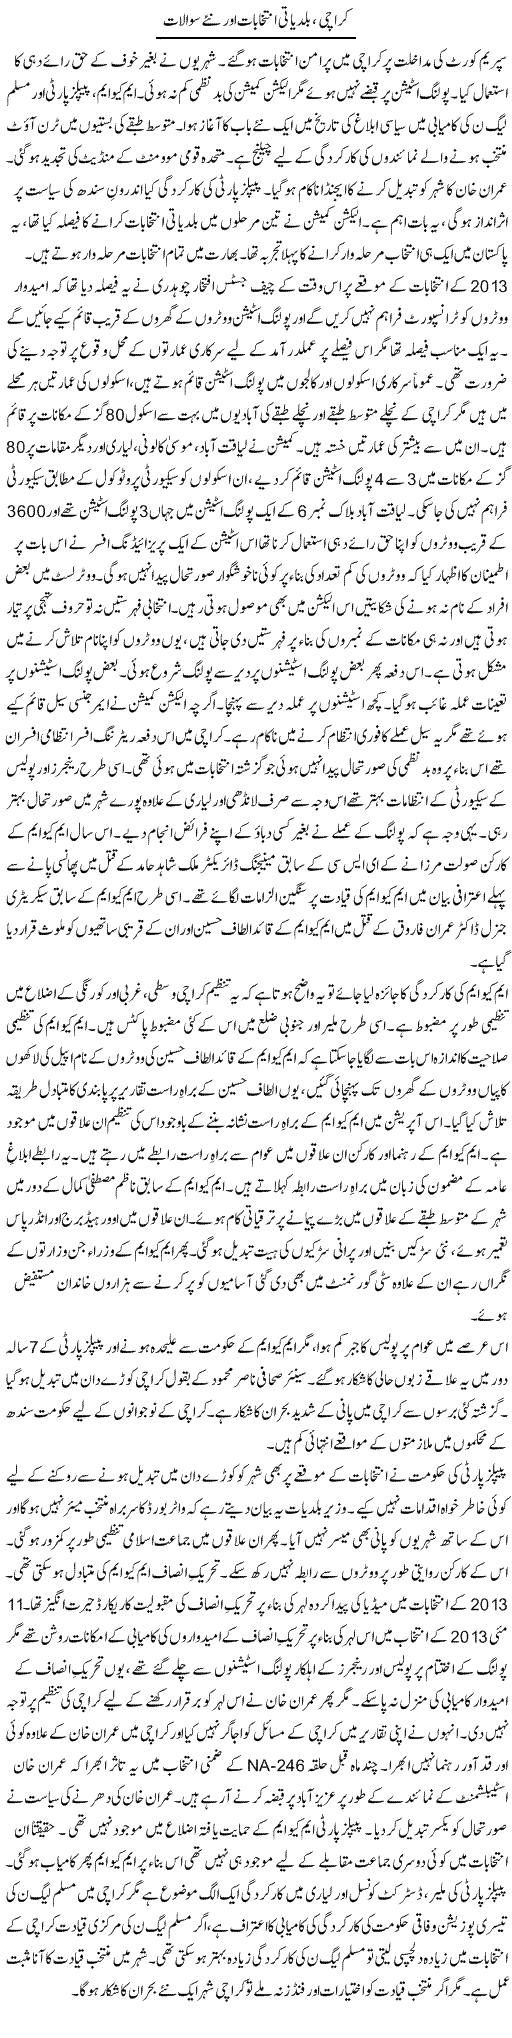 Karachi, baldeati intikhabat aur naye sawalaat | Tausif Ahmad Khan | Daily Urdu Columns